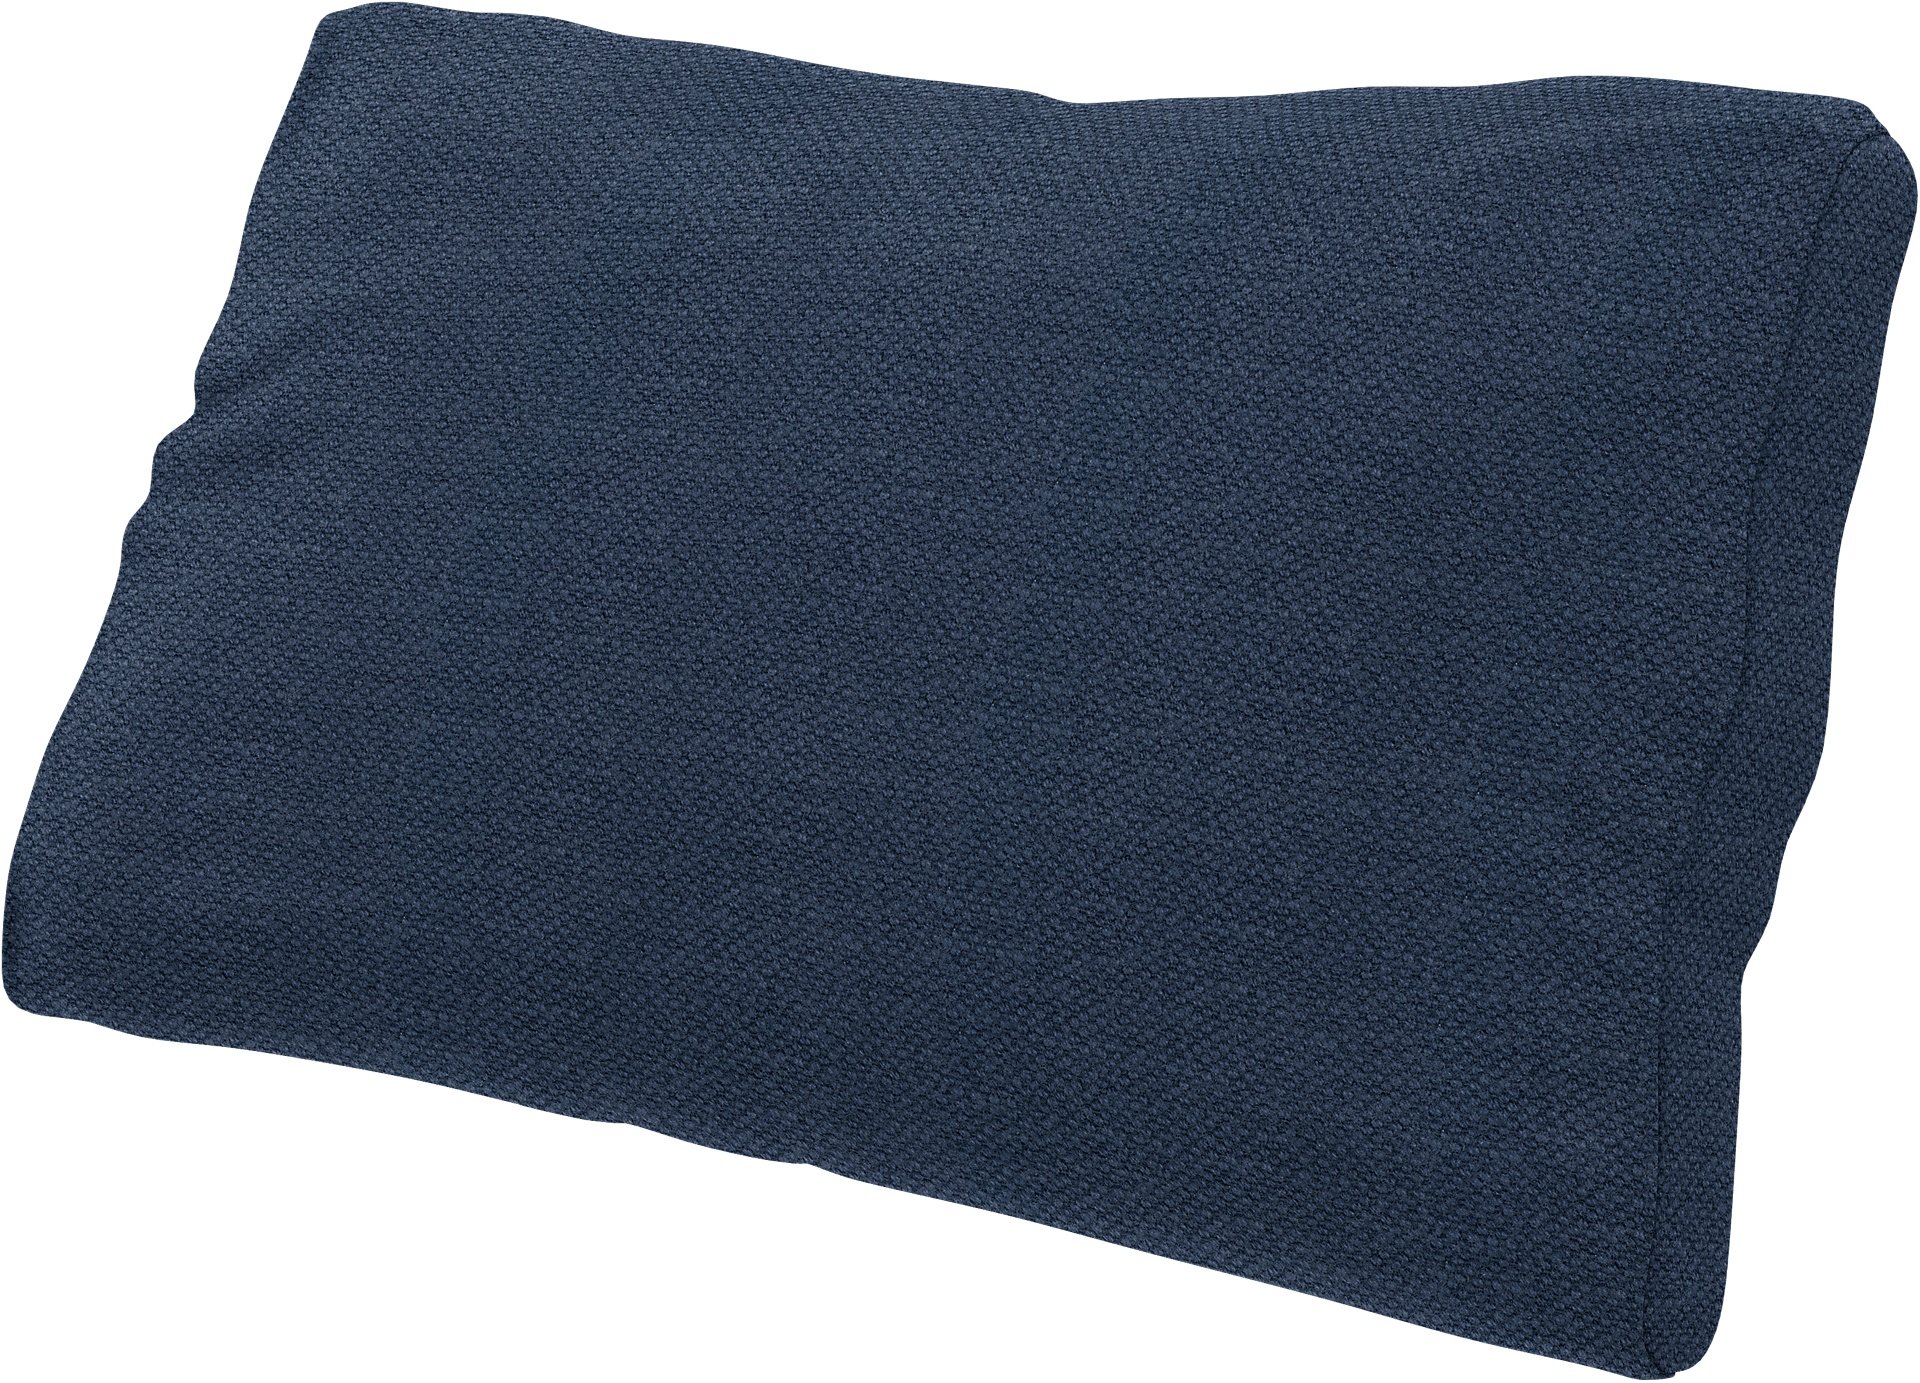 IKEA - Lumbar cushion cover Farlov, Navy Blue, Linen - Bemz